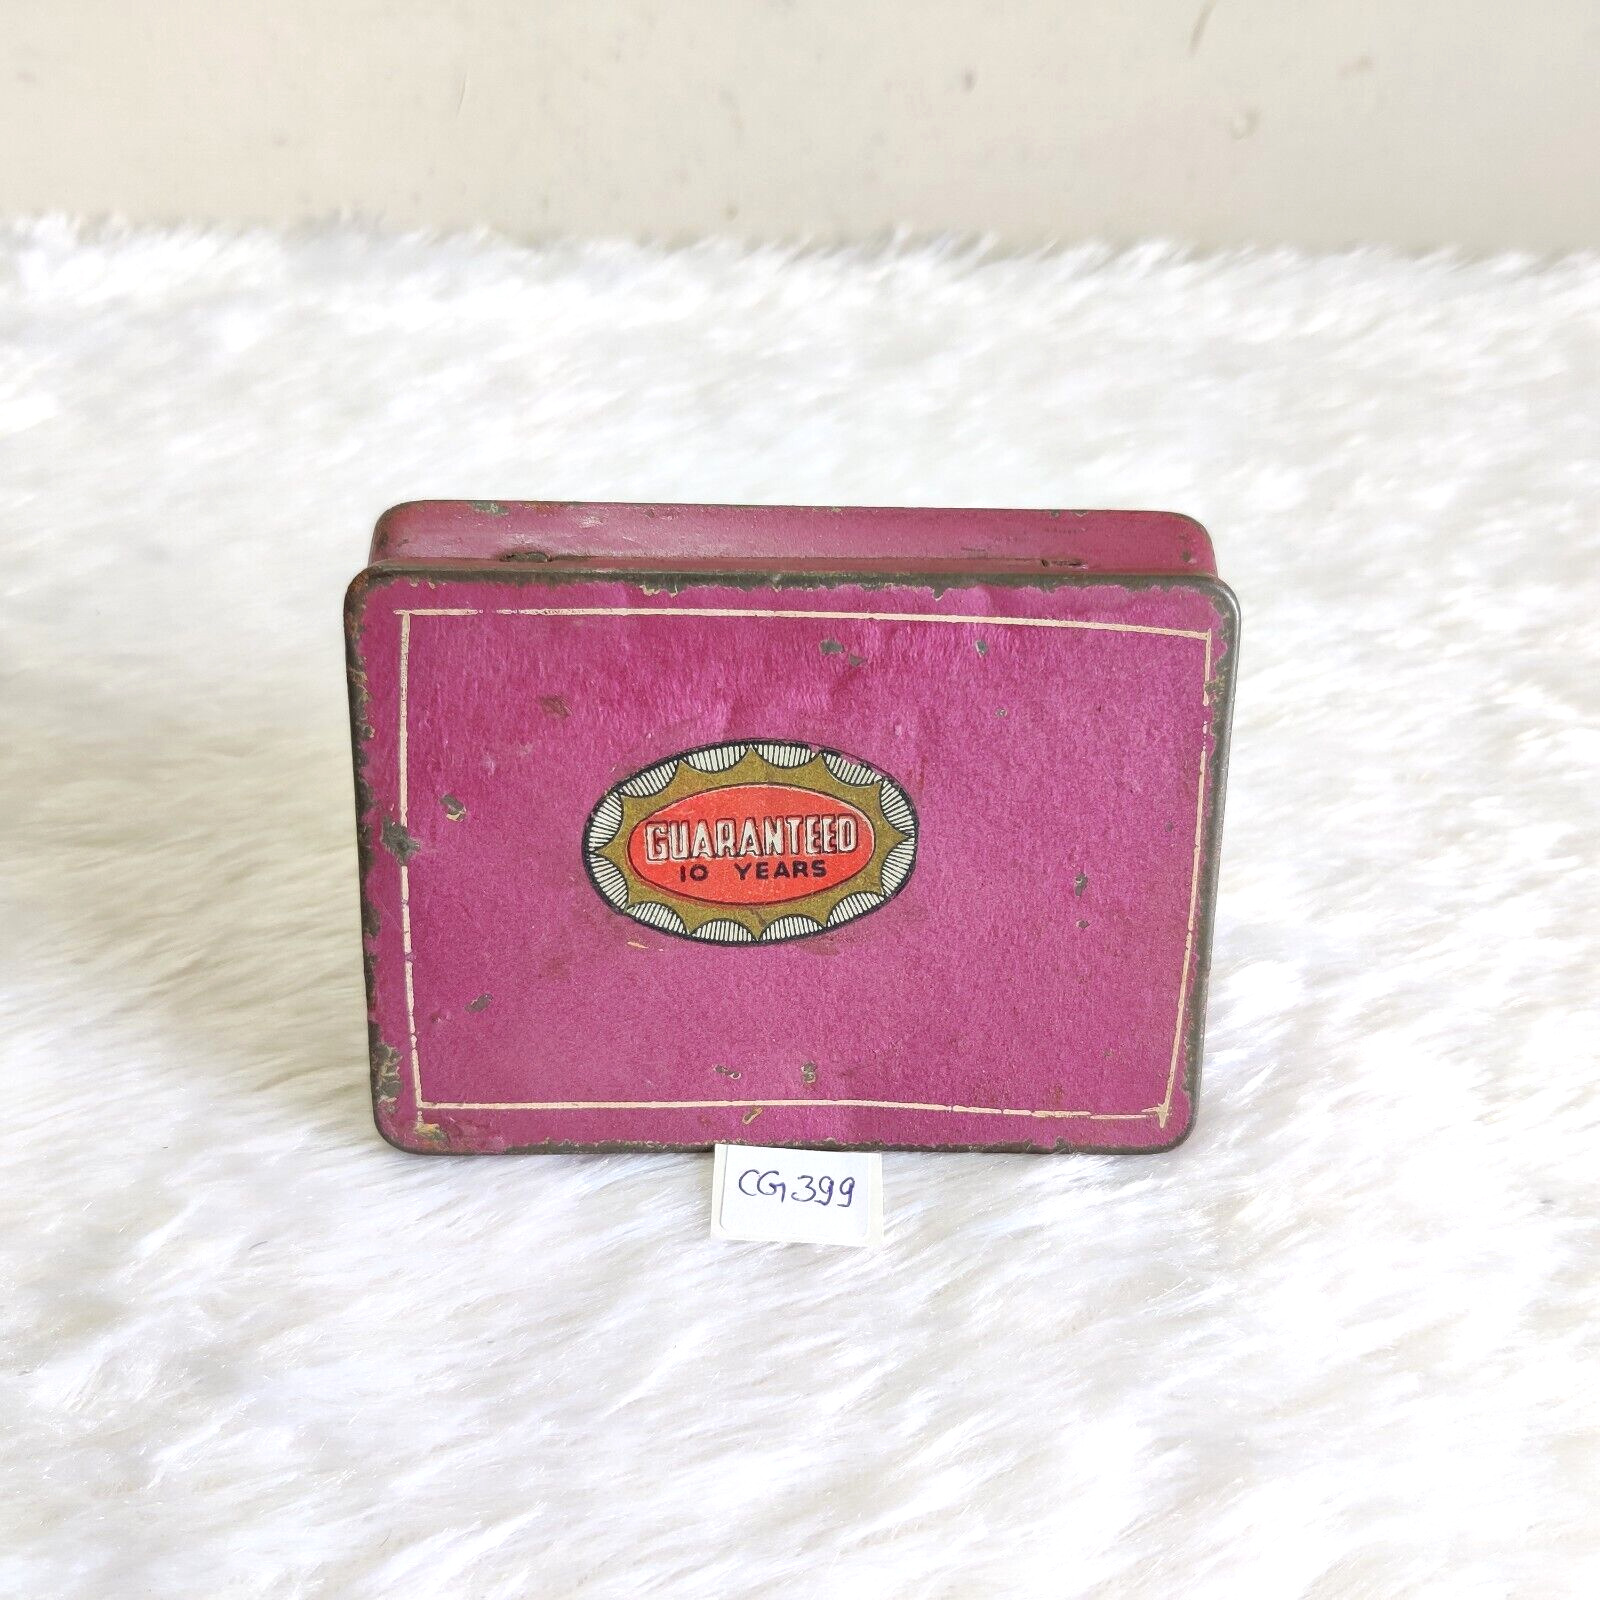 1940s Vintage Guaranteed 10 Years Cigarette Advertising Tin Box Rare Old CG399